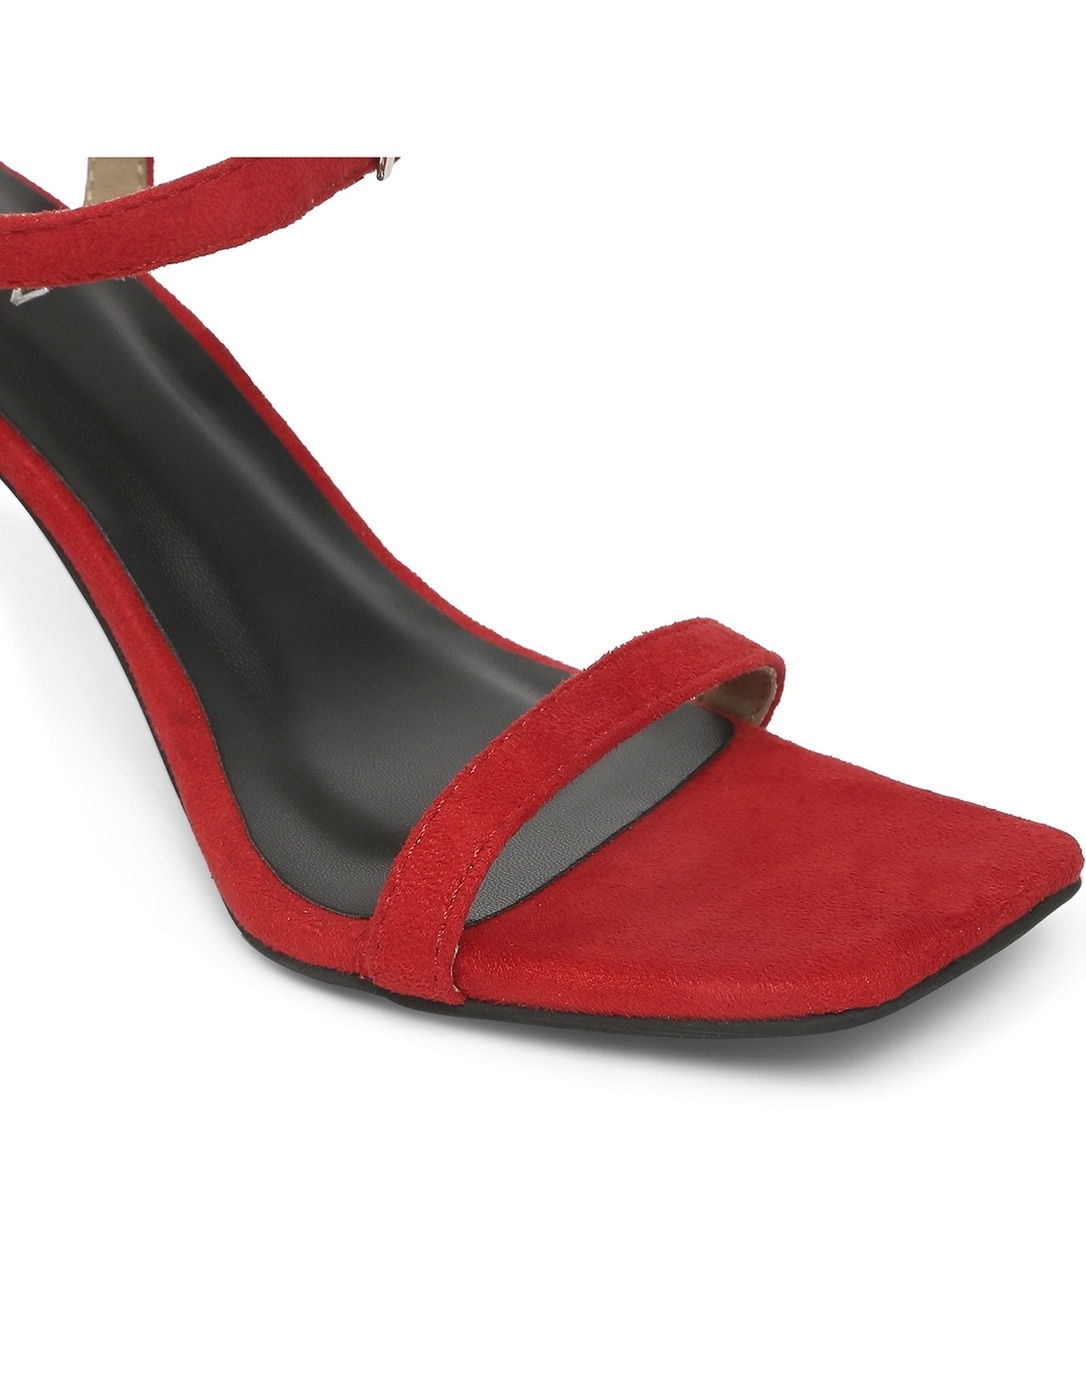 Red Heels | Red High Heels | PrettyLittleThing QA